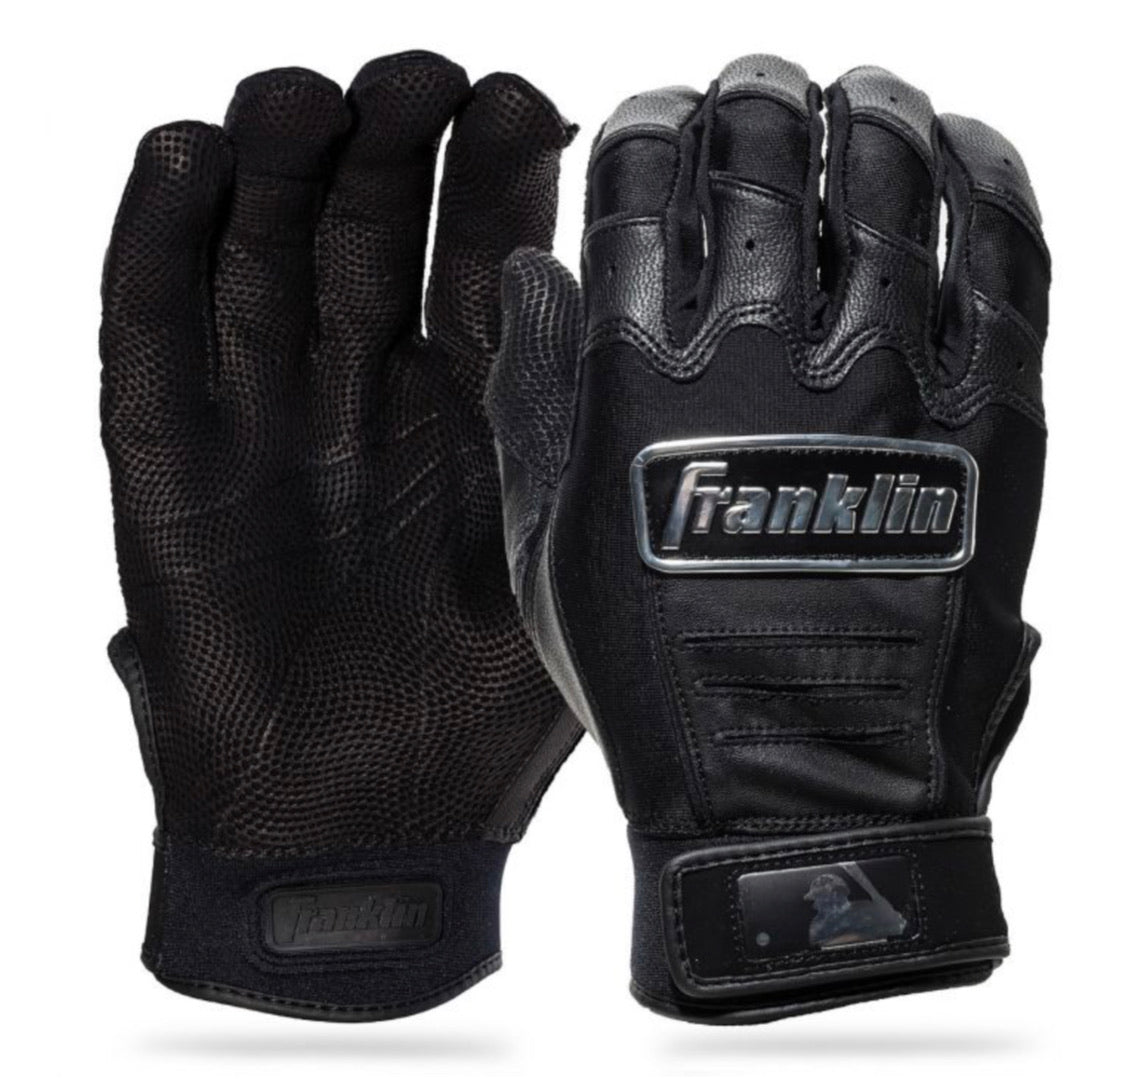 CFX PRO Full Color Chrome Batting Gloves - AtlanticCoastSports